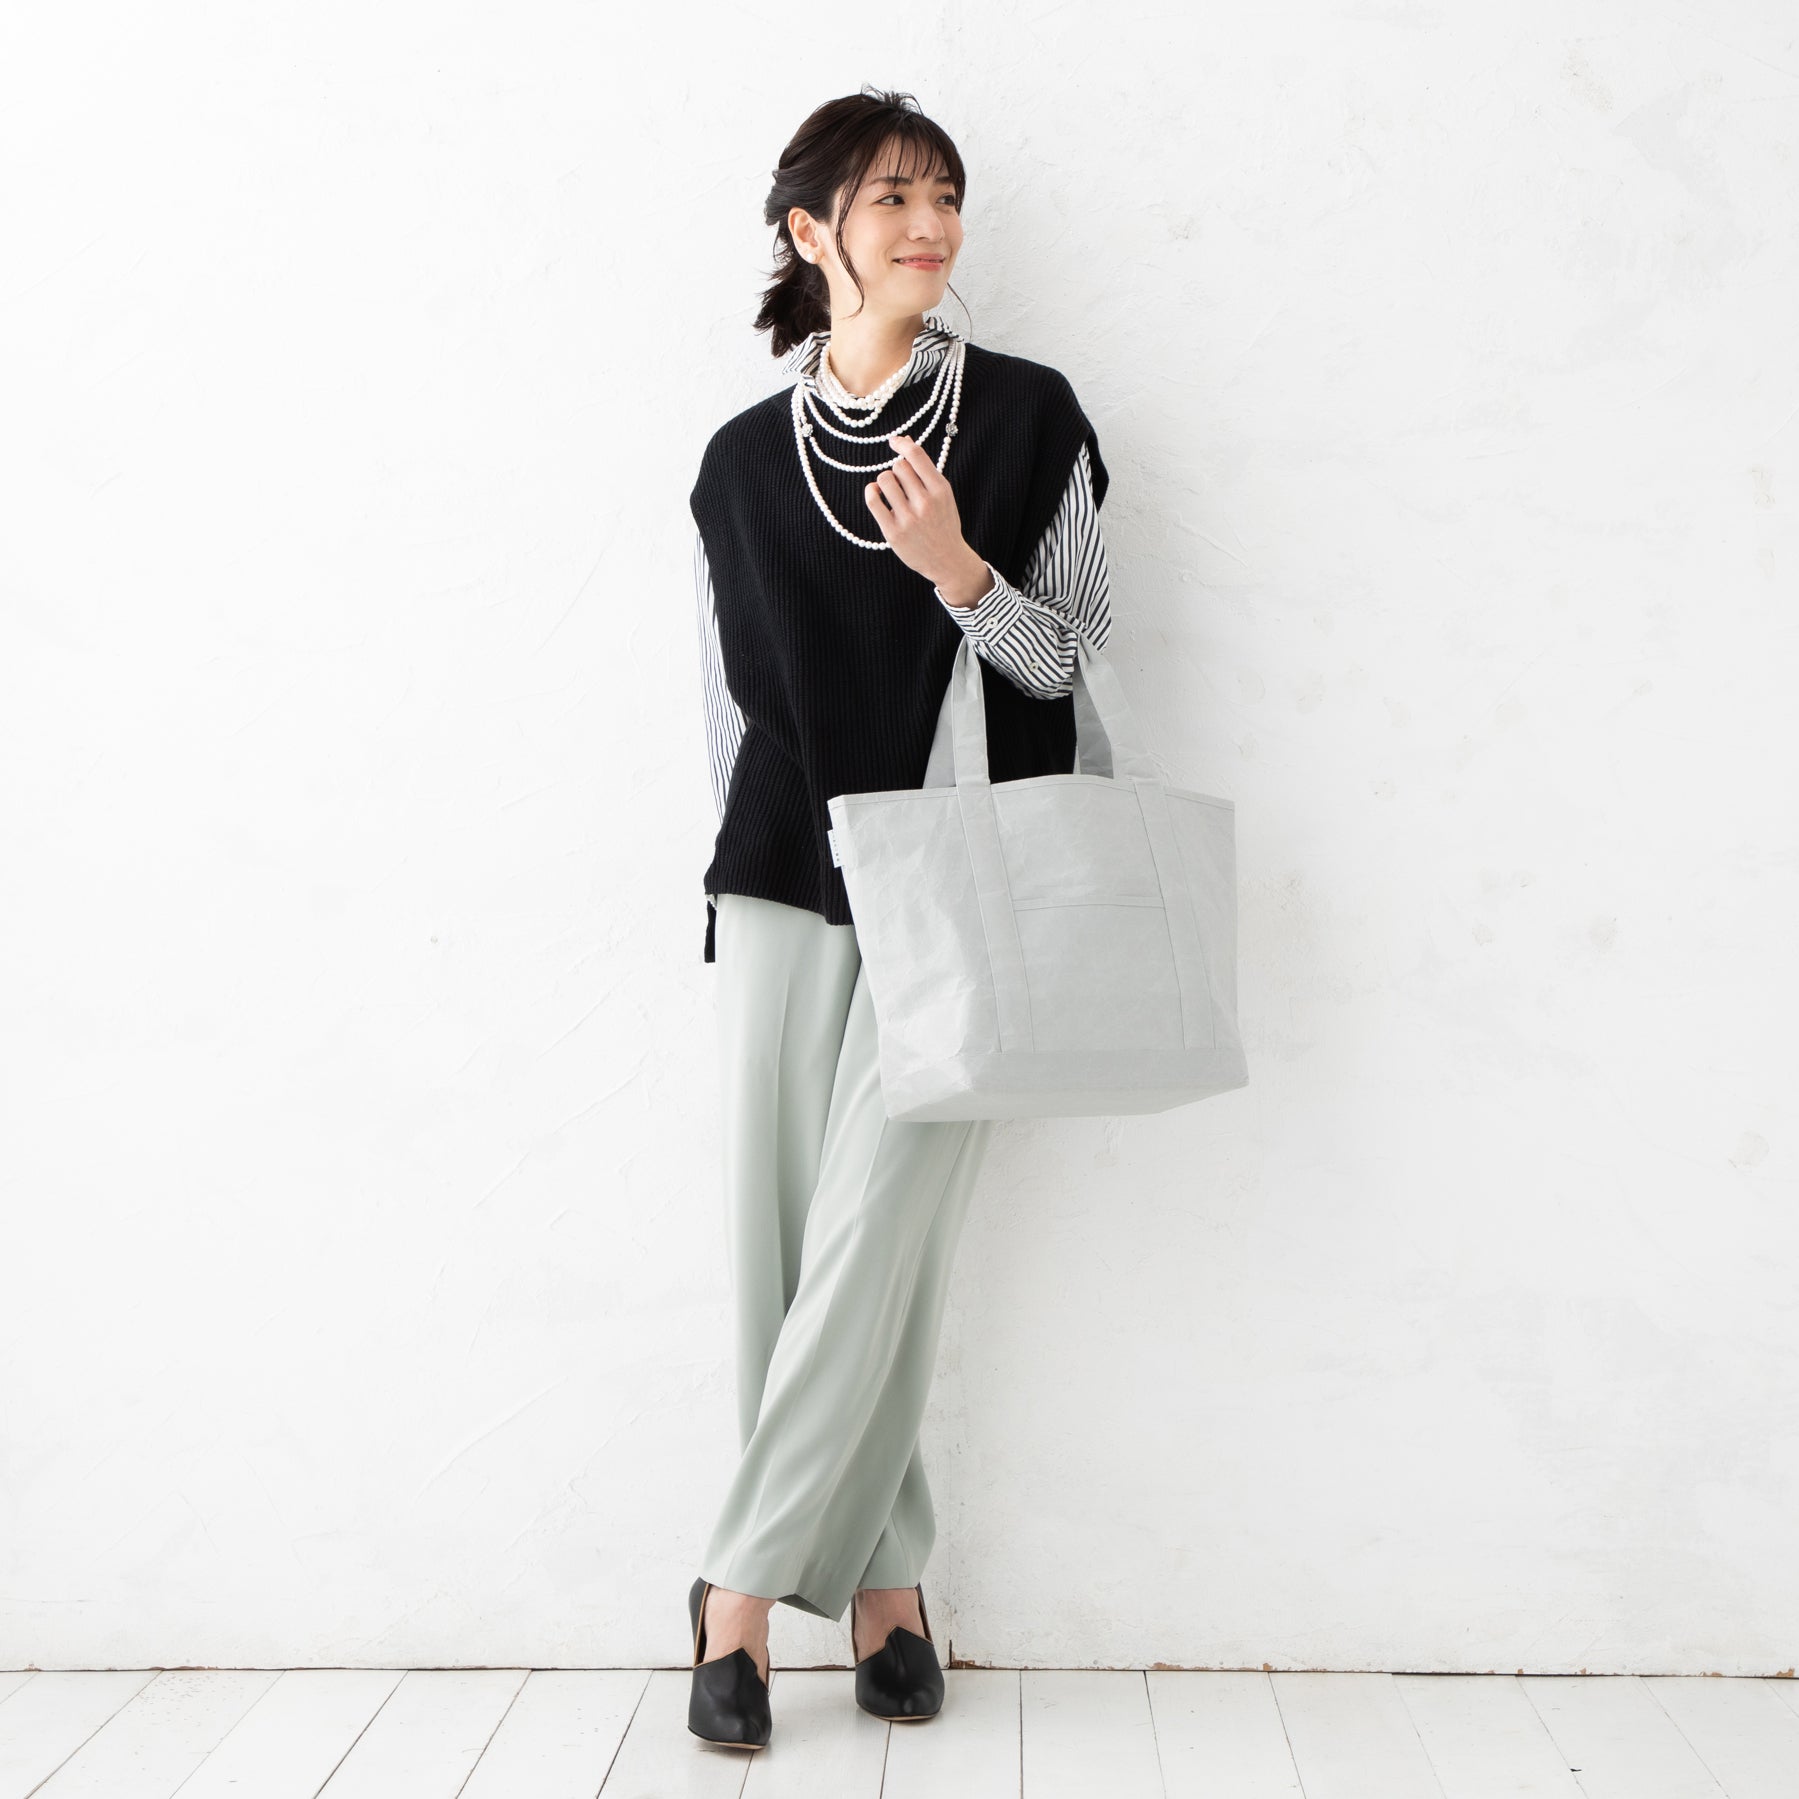 Okinawa Hanagasa Girl Tote bag – Oki Social Store